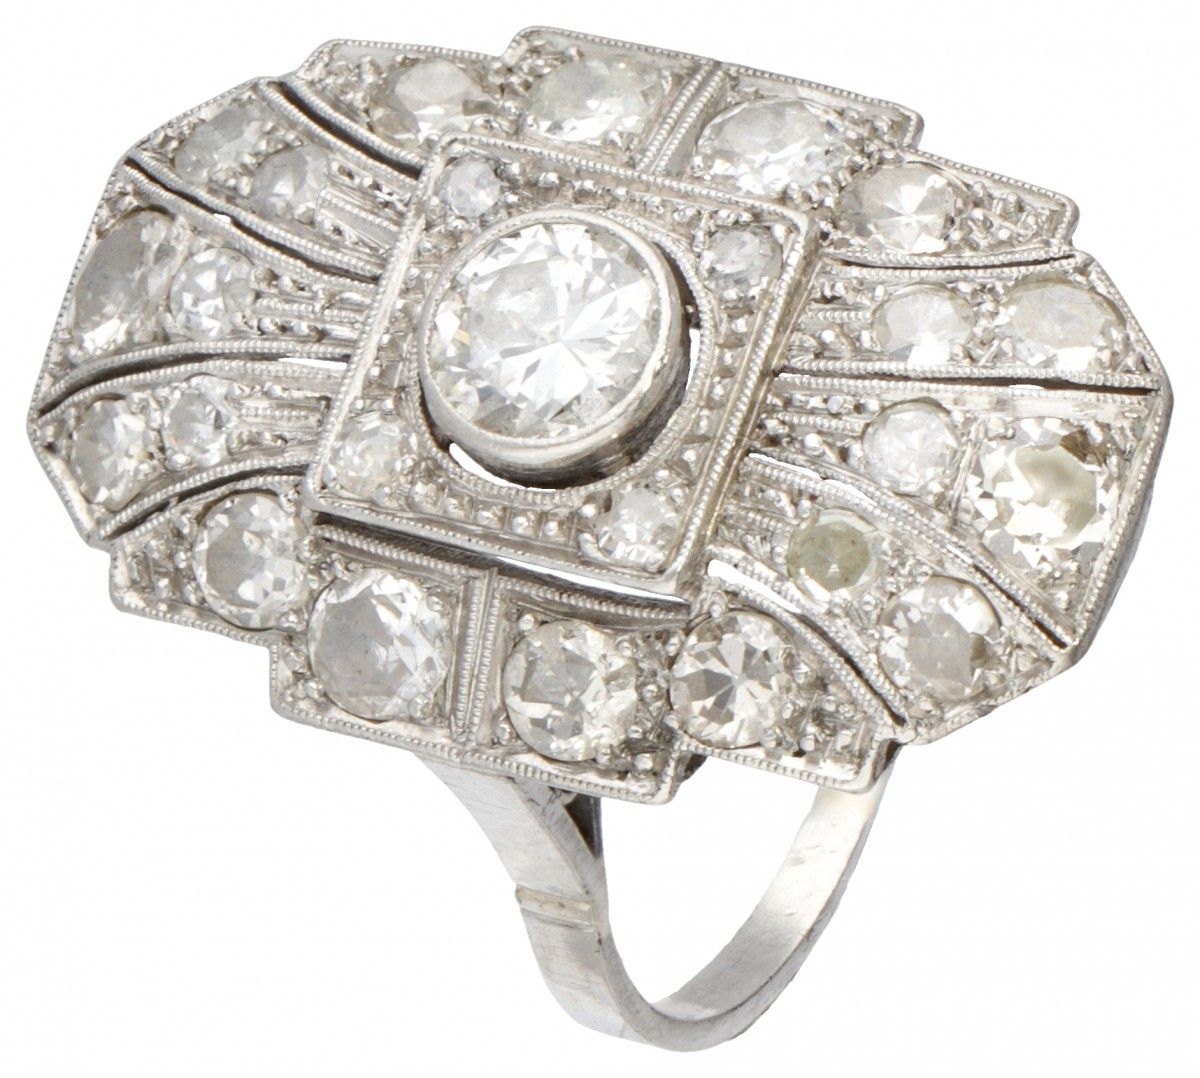 Pt 900 Platinum Art Deco dinner ring set with approx. 1.87 ct. Diamond. Hallmark&hellip;